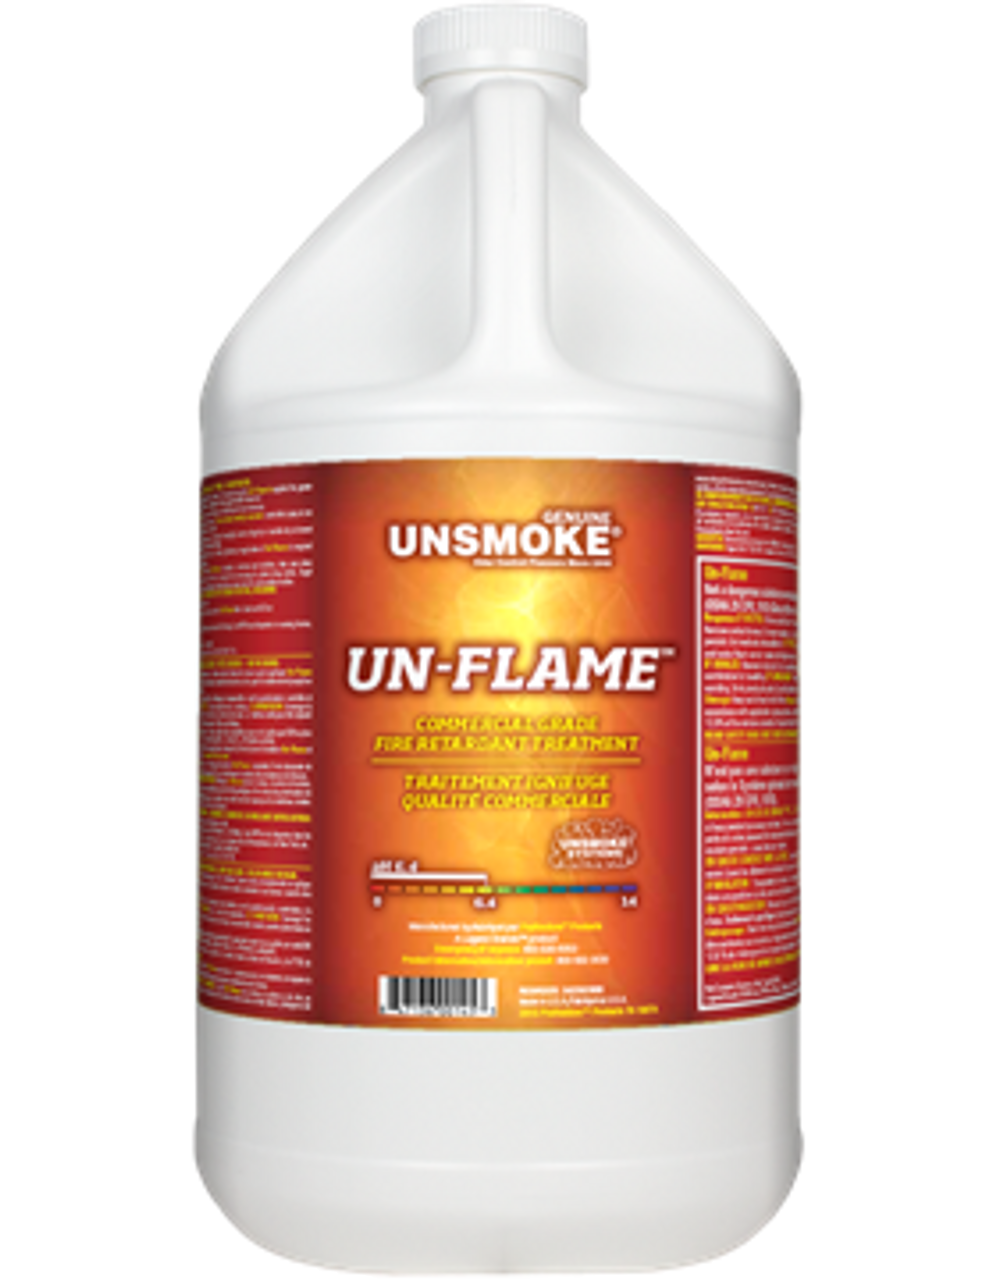 Unsmoke Un-Flame Commercial Grade Fire Retardant Treatment  - 1gal